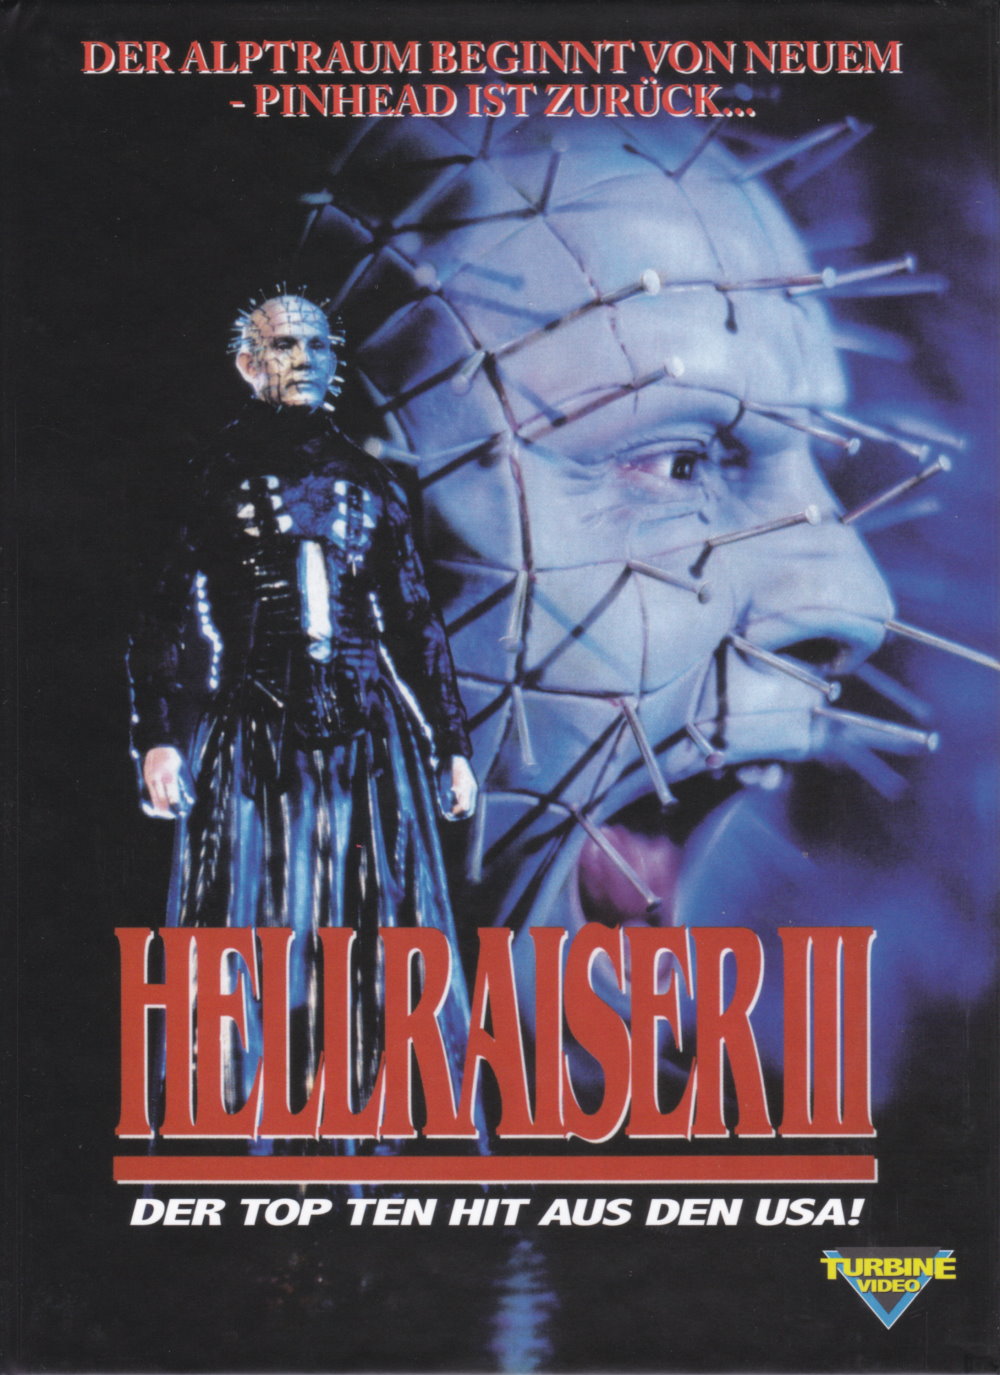 Cover - Hellraiser III - Hell on Earth.jpg